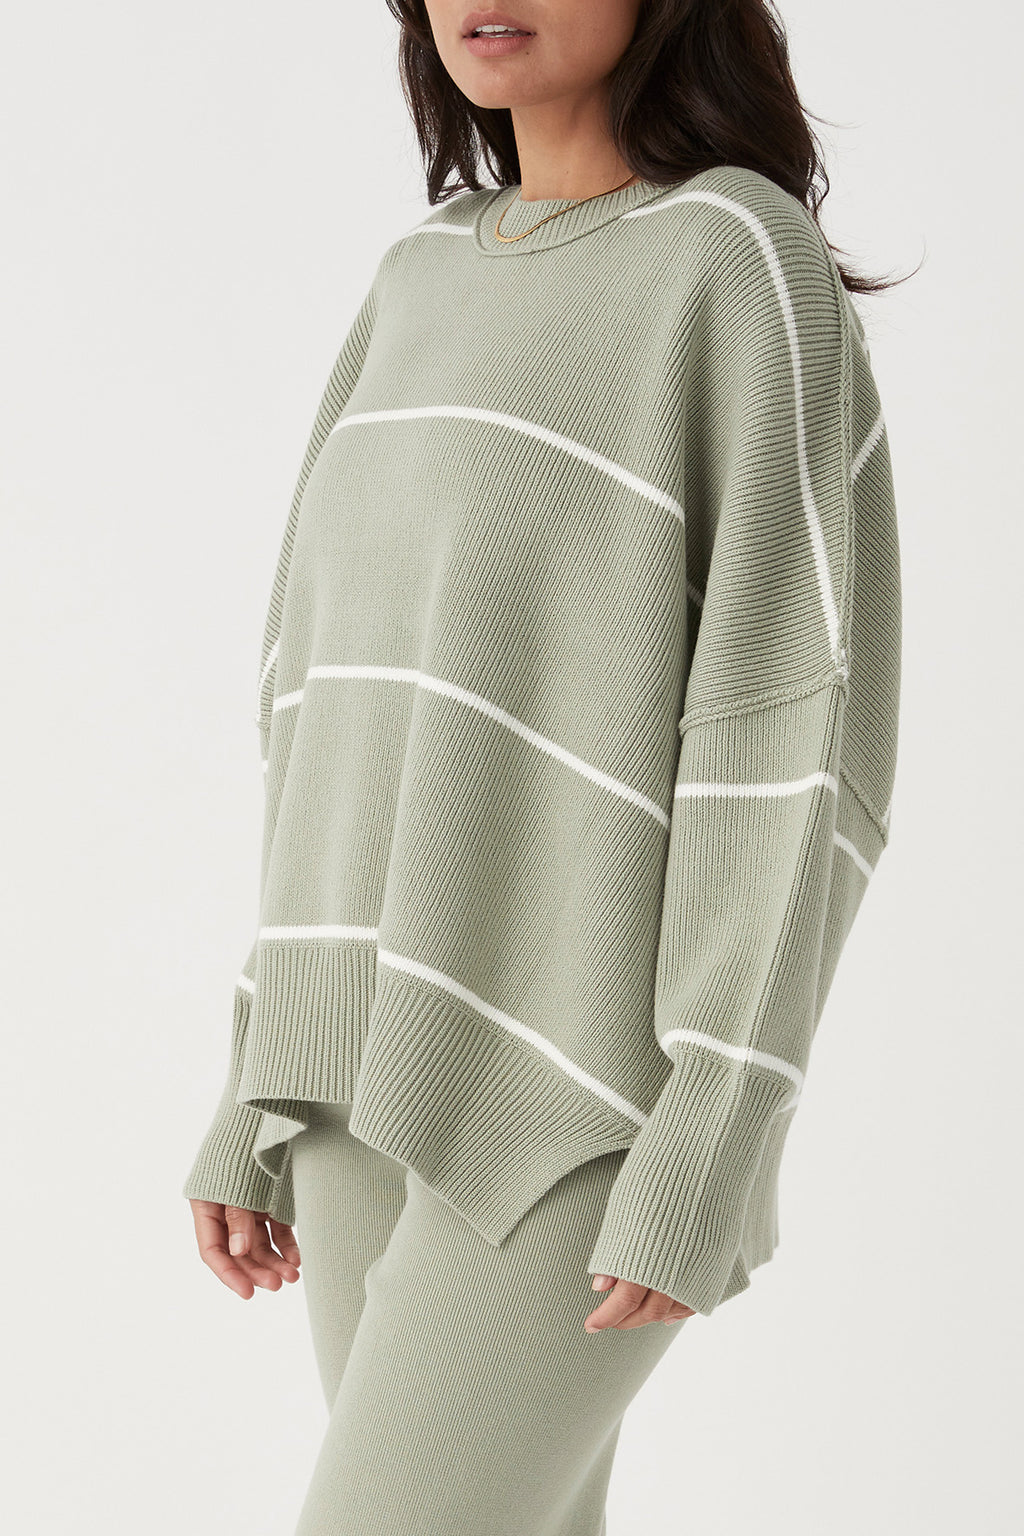 Harper Stripe Sweater - Sage & Cream